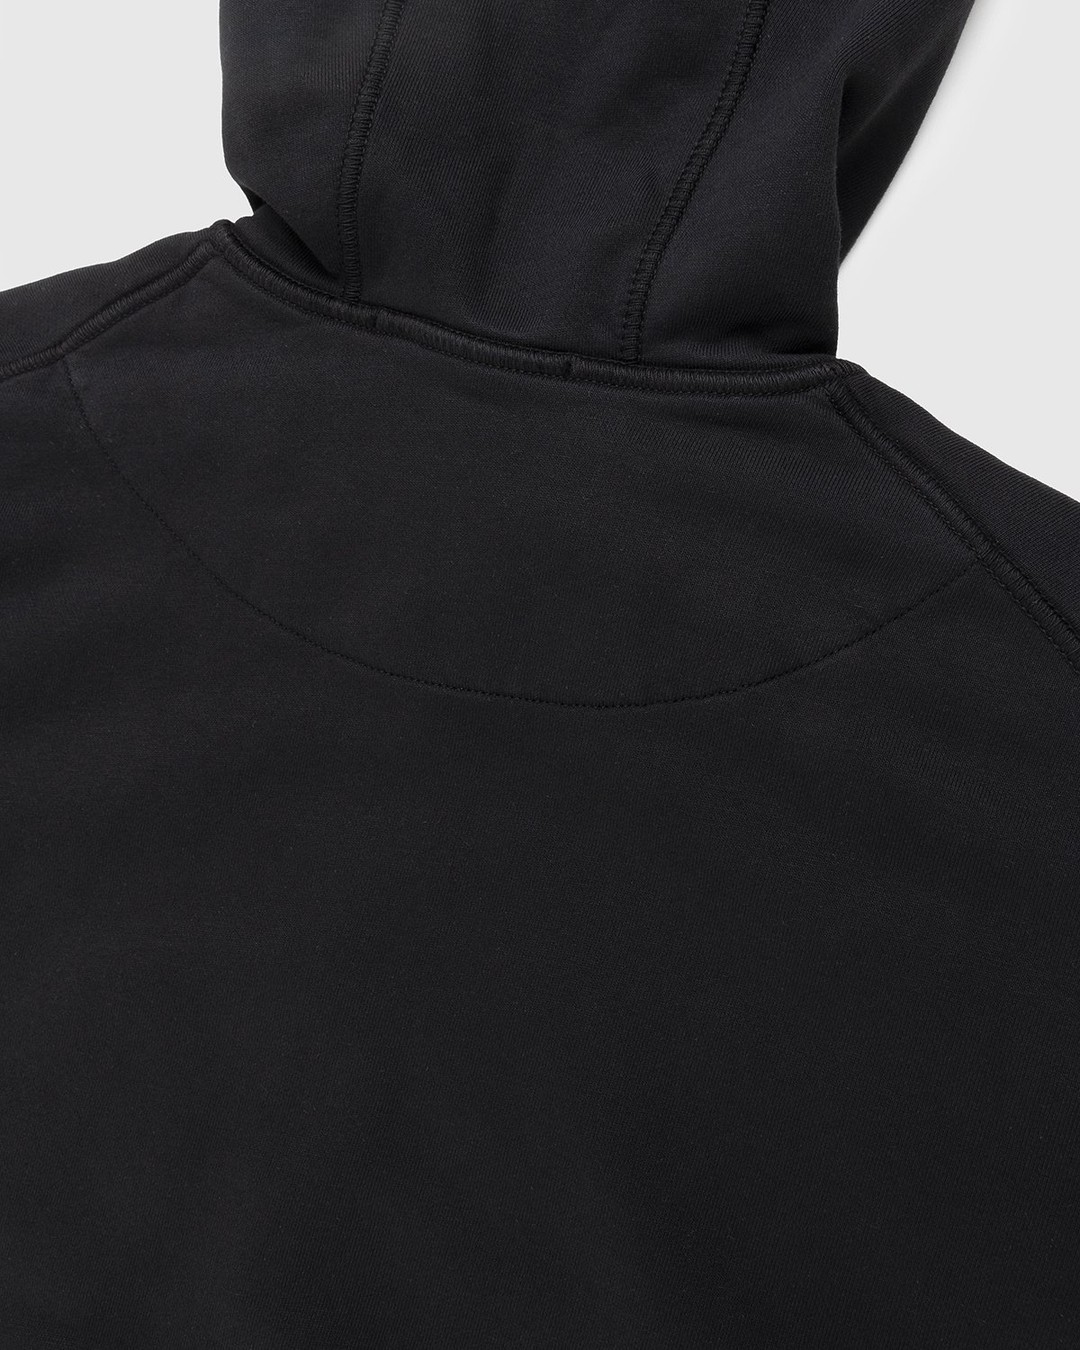 Stone Island – 64251 Garment-Dyed Full-Zip Hoodie Black - Zip-Up Sweats - Black - Image 3